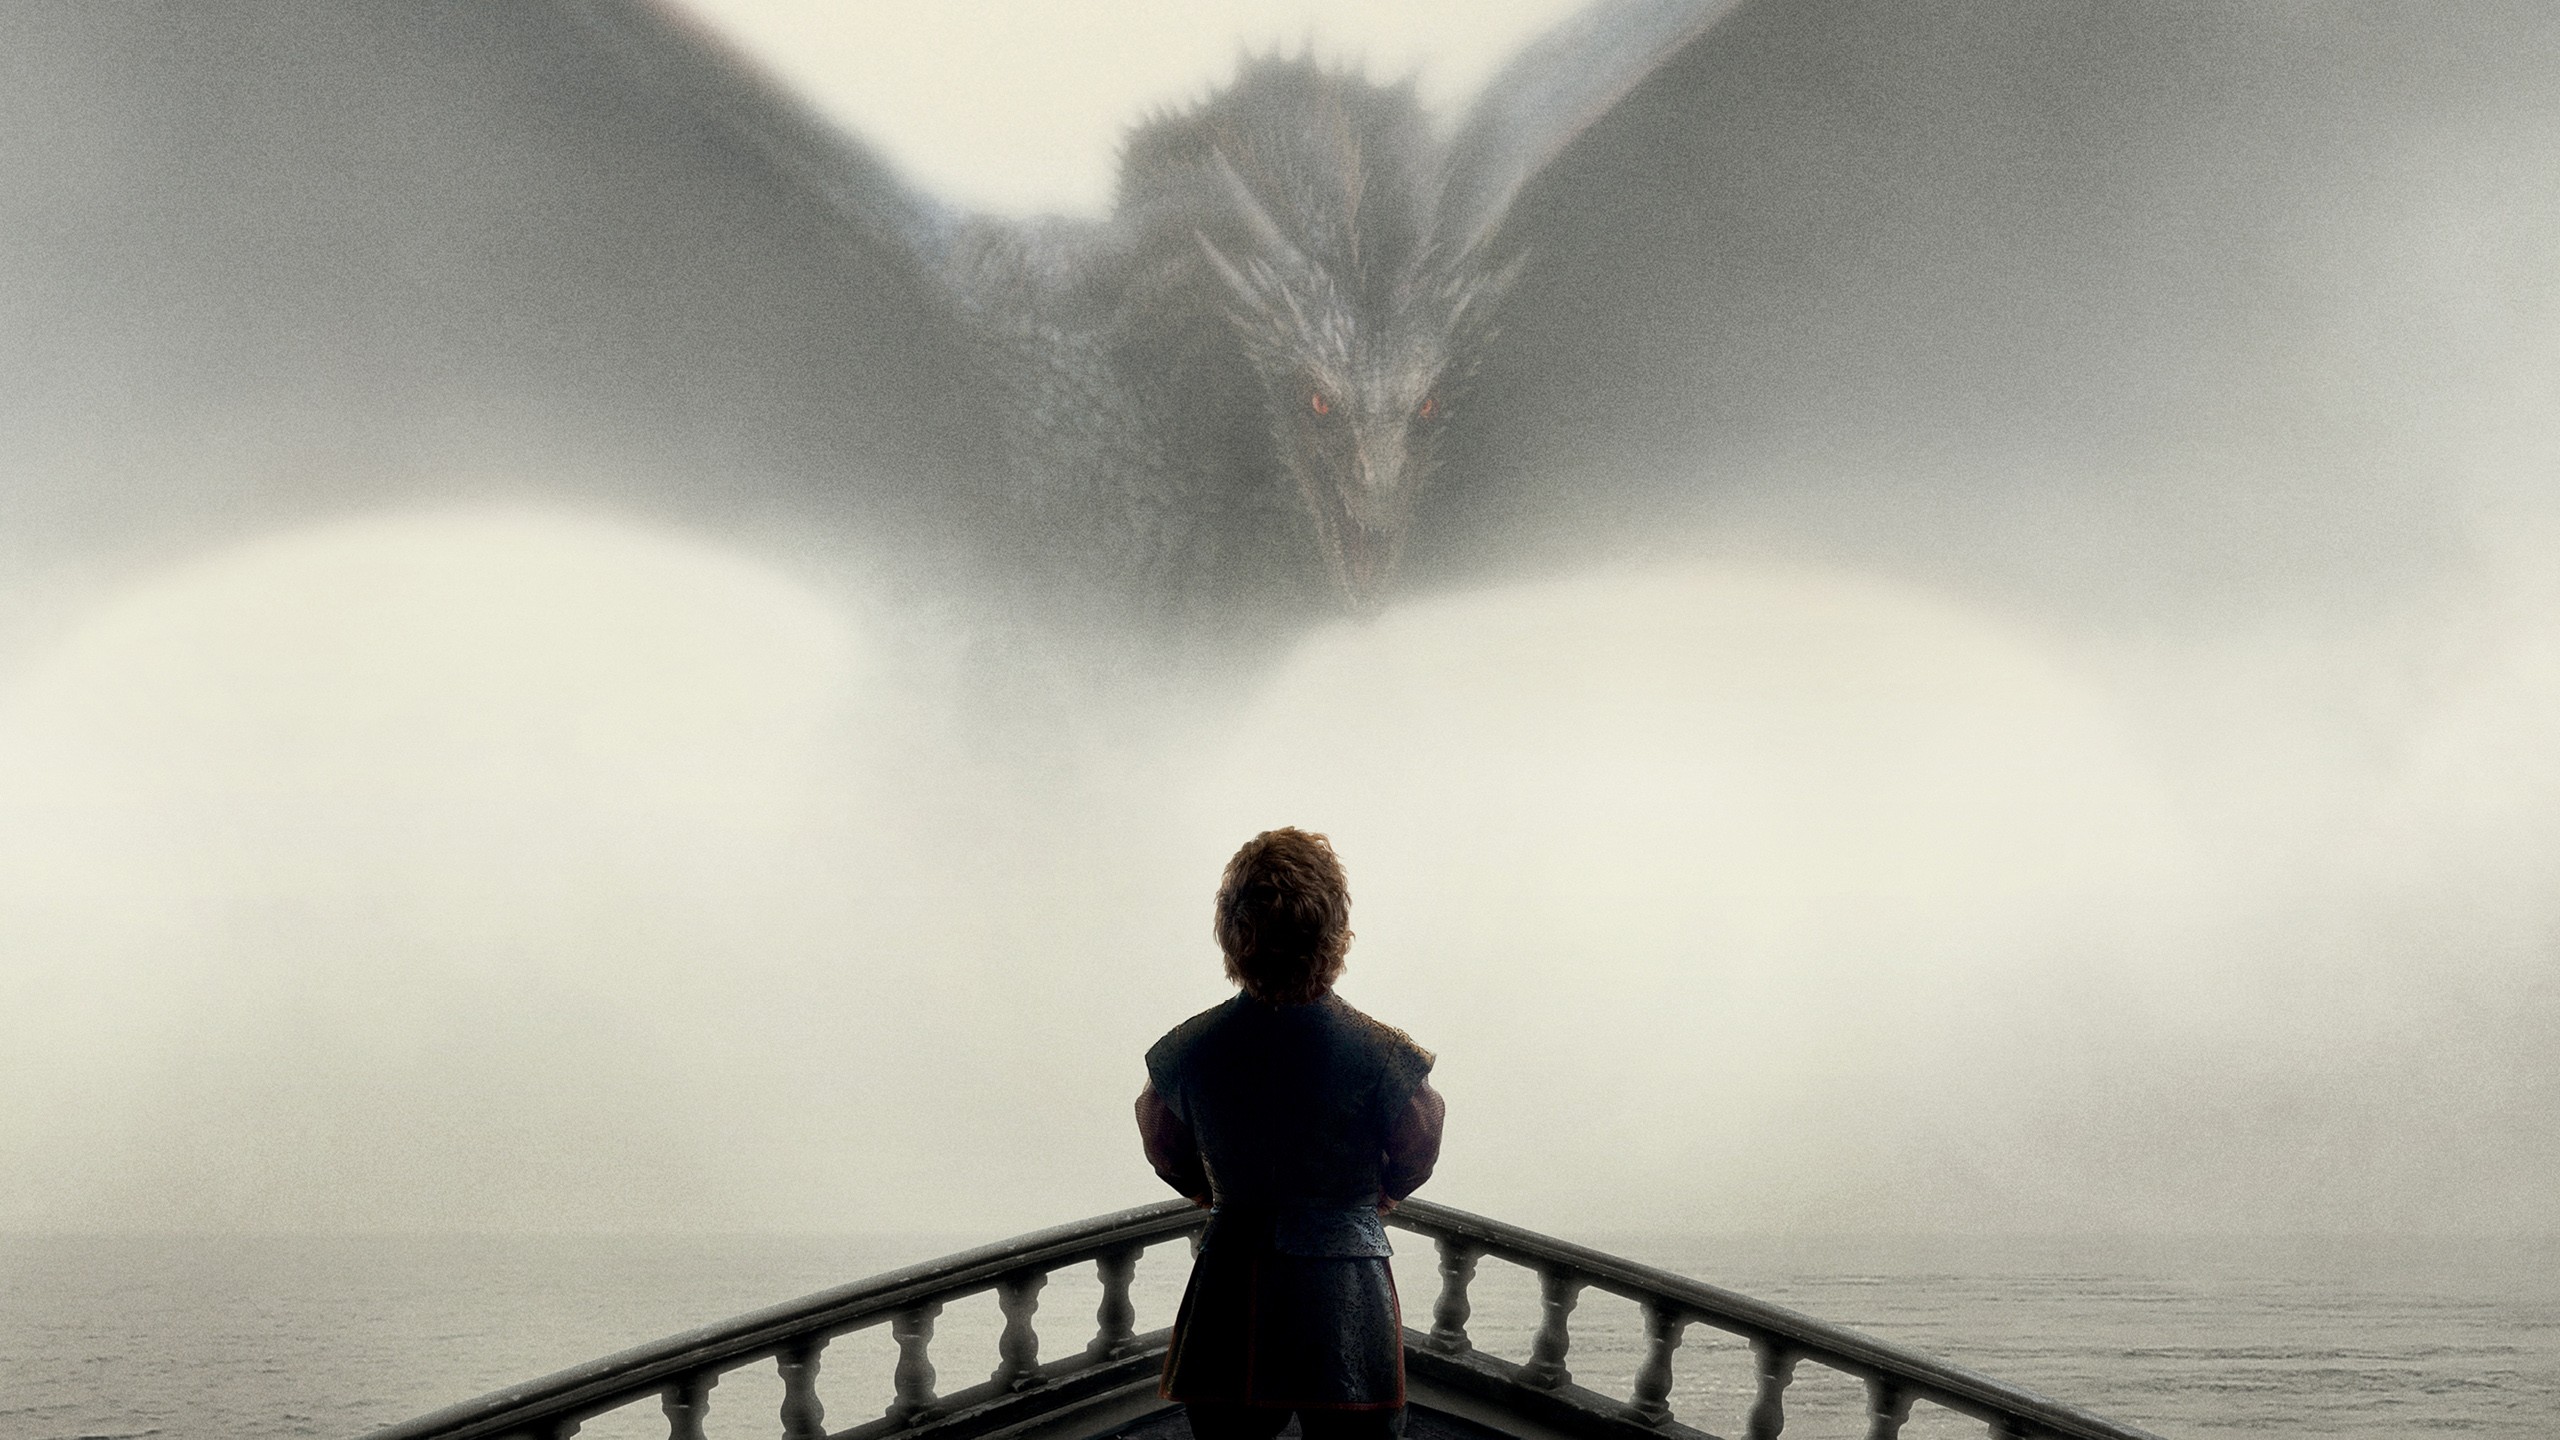 Game of Thrones wallpaper HD ·① Download free beautiful HD ...